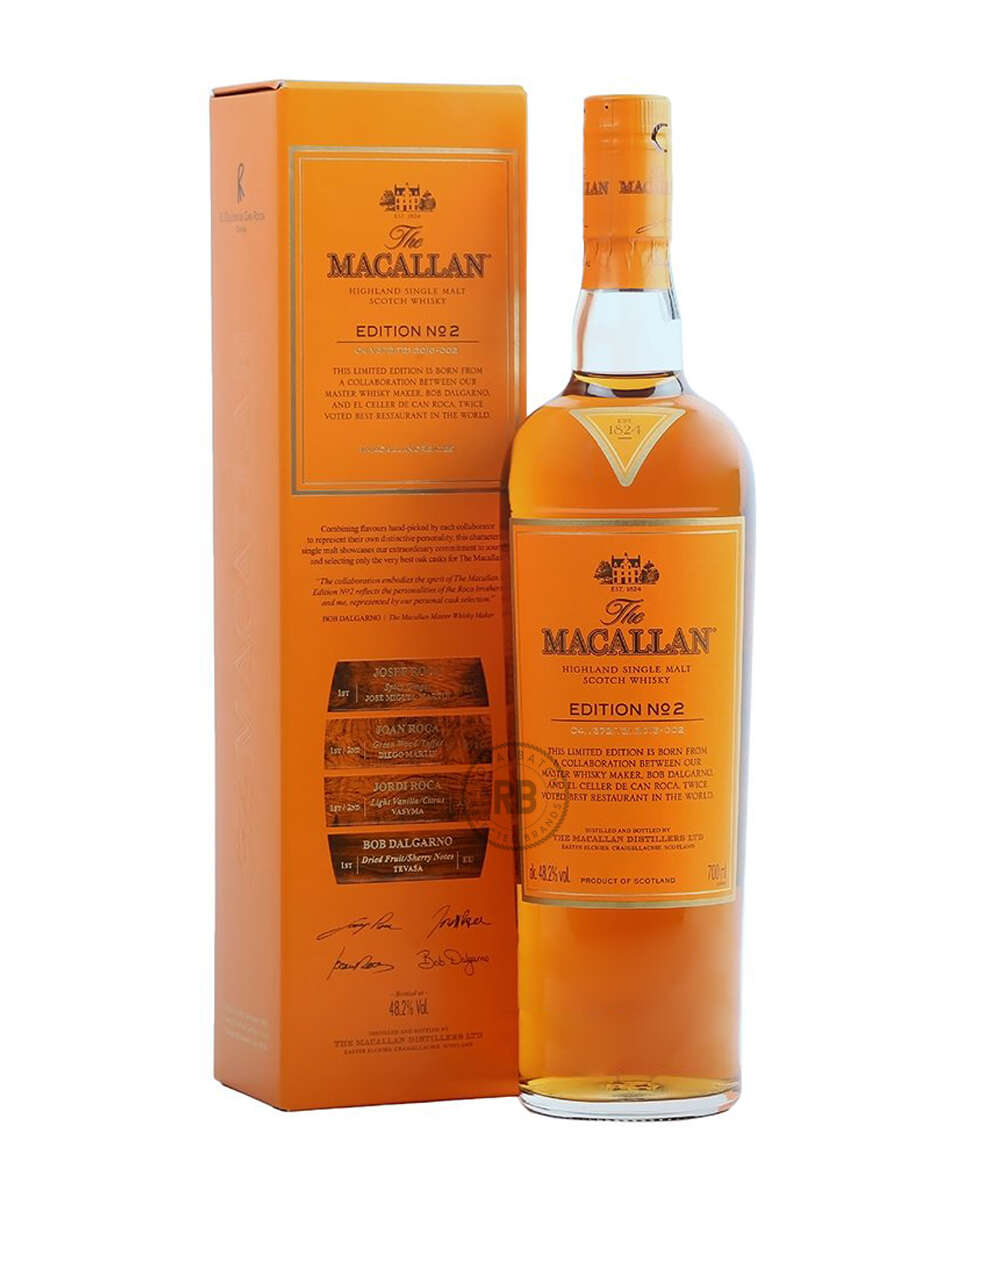 The Macallan Edition No. 2 Highland Single Malt Scotch Whisky